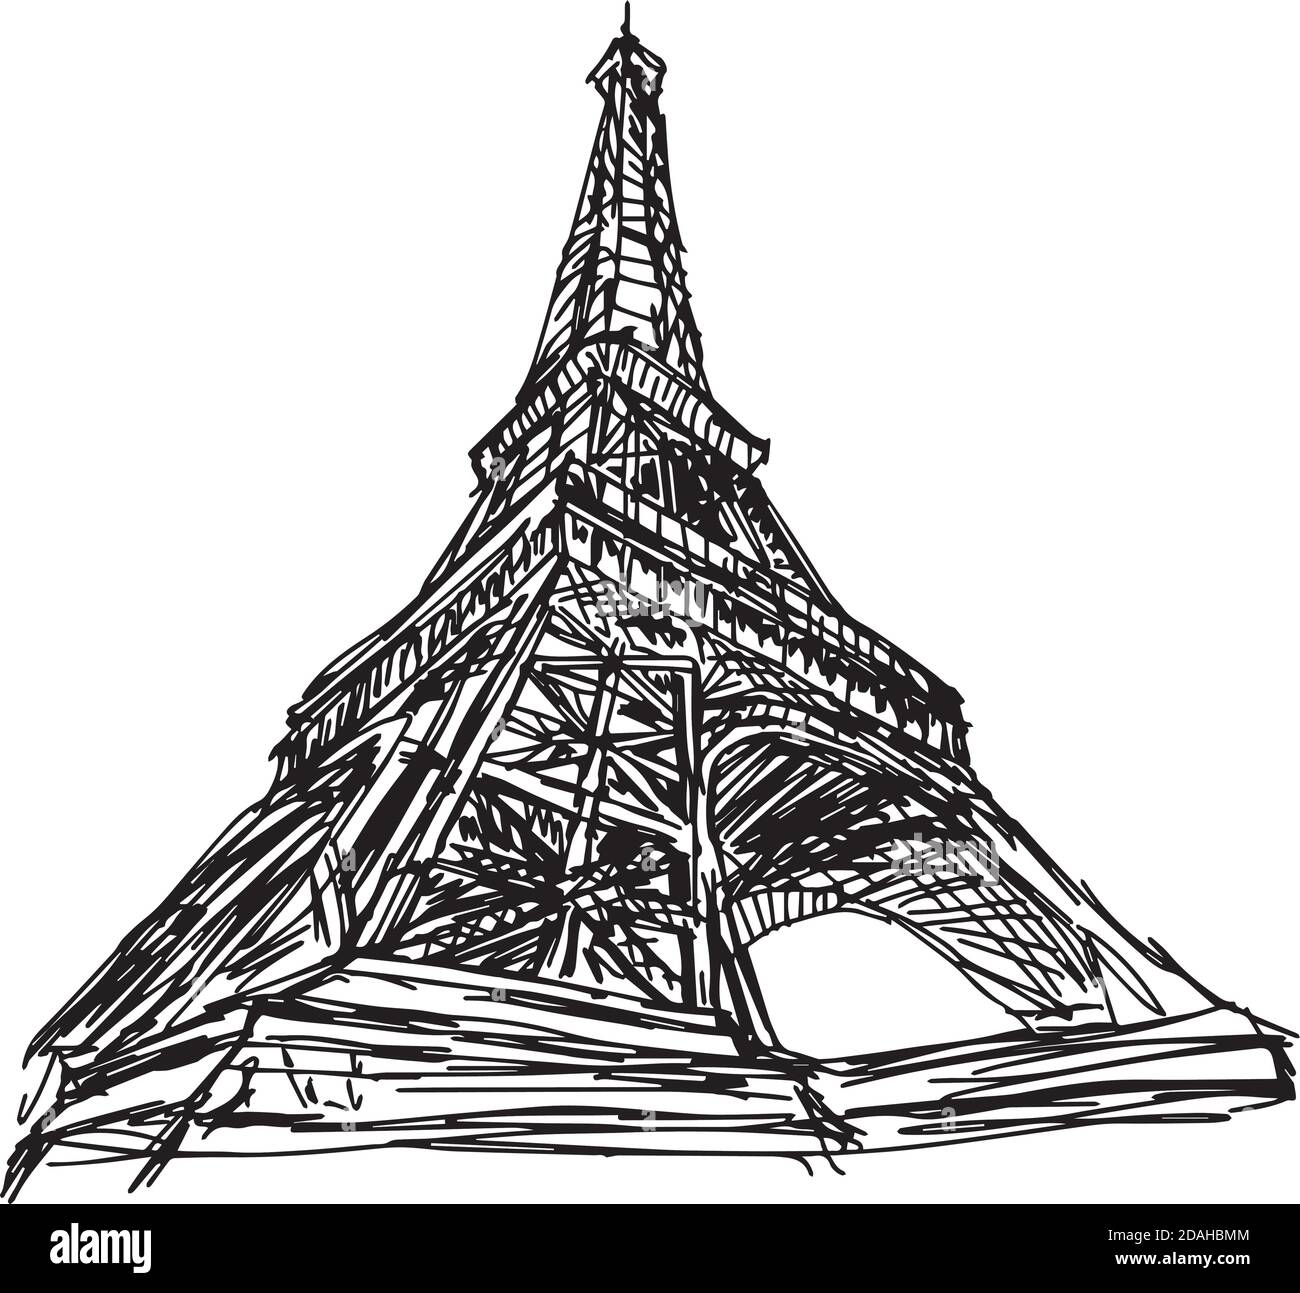 illustration vector doodle hand drawn of sketch Paris eiffel tower ...